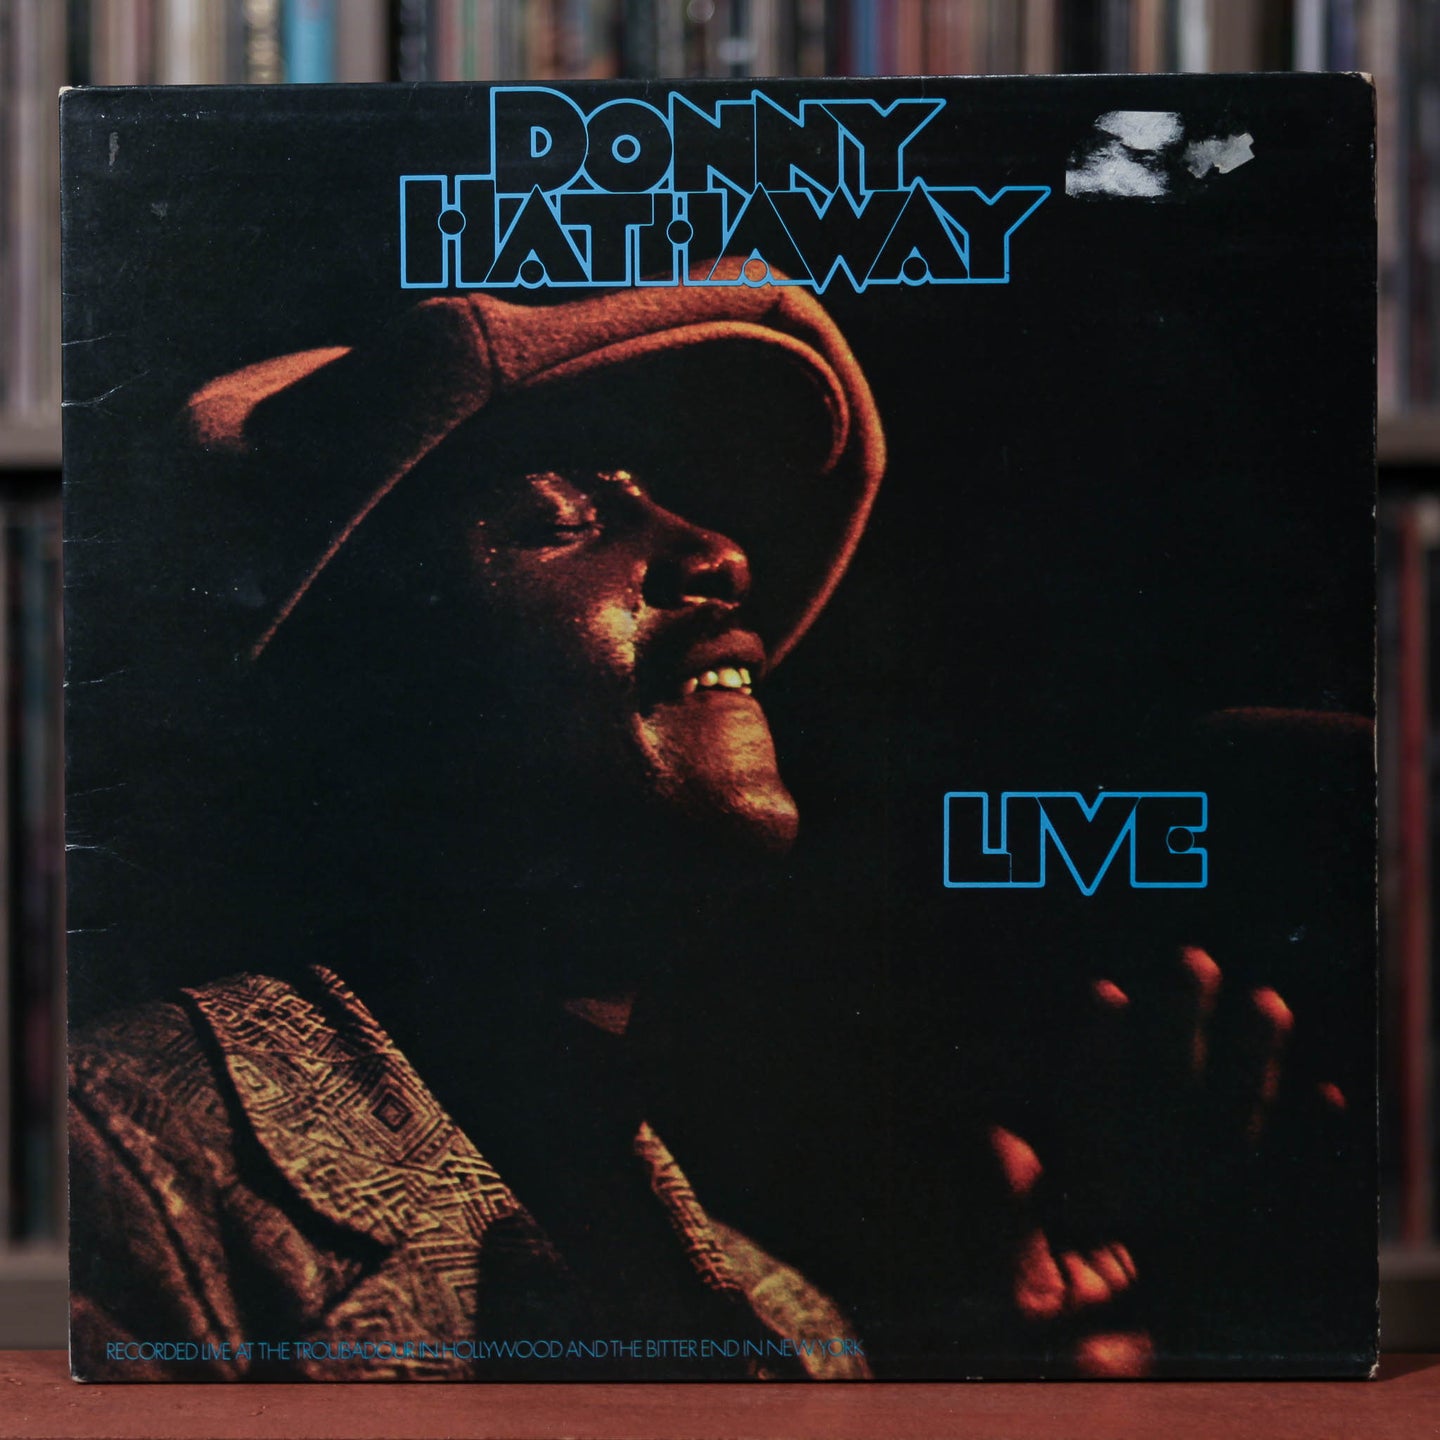 Donny Hathaway - Live - UK Import - 1972 Atlantic, VG/VG